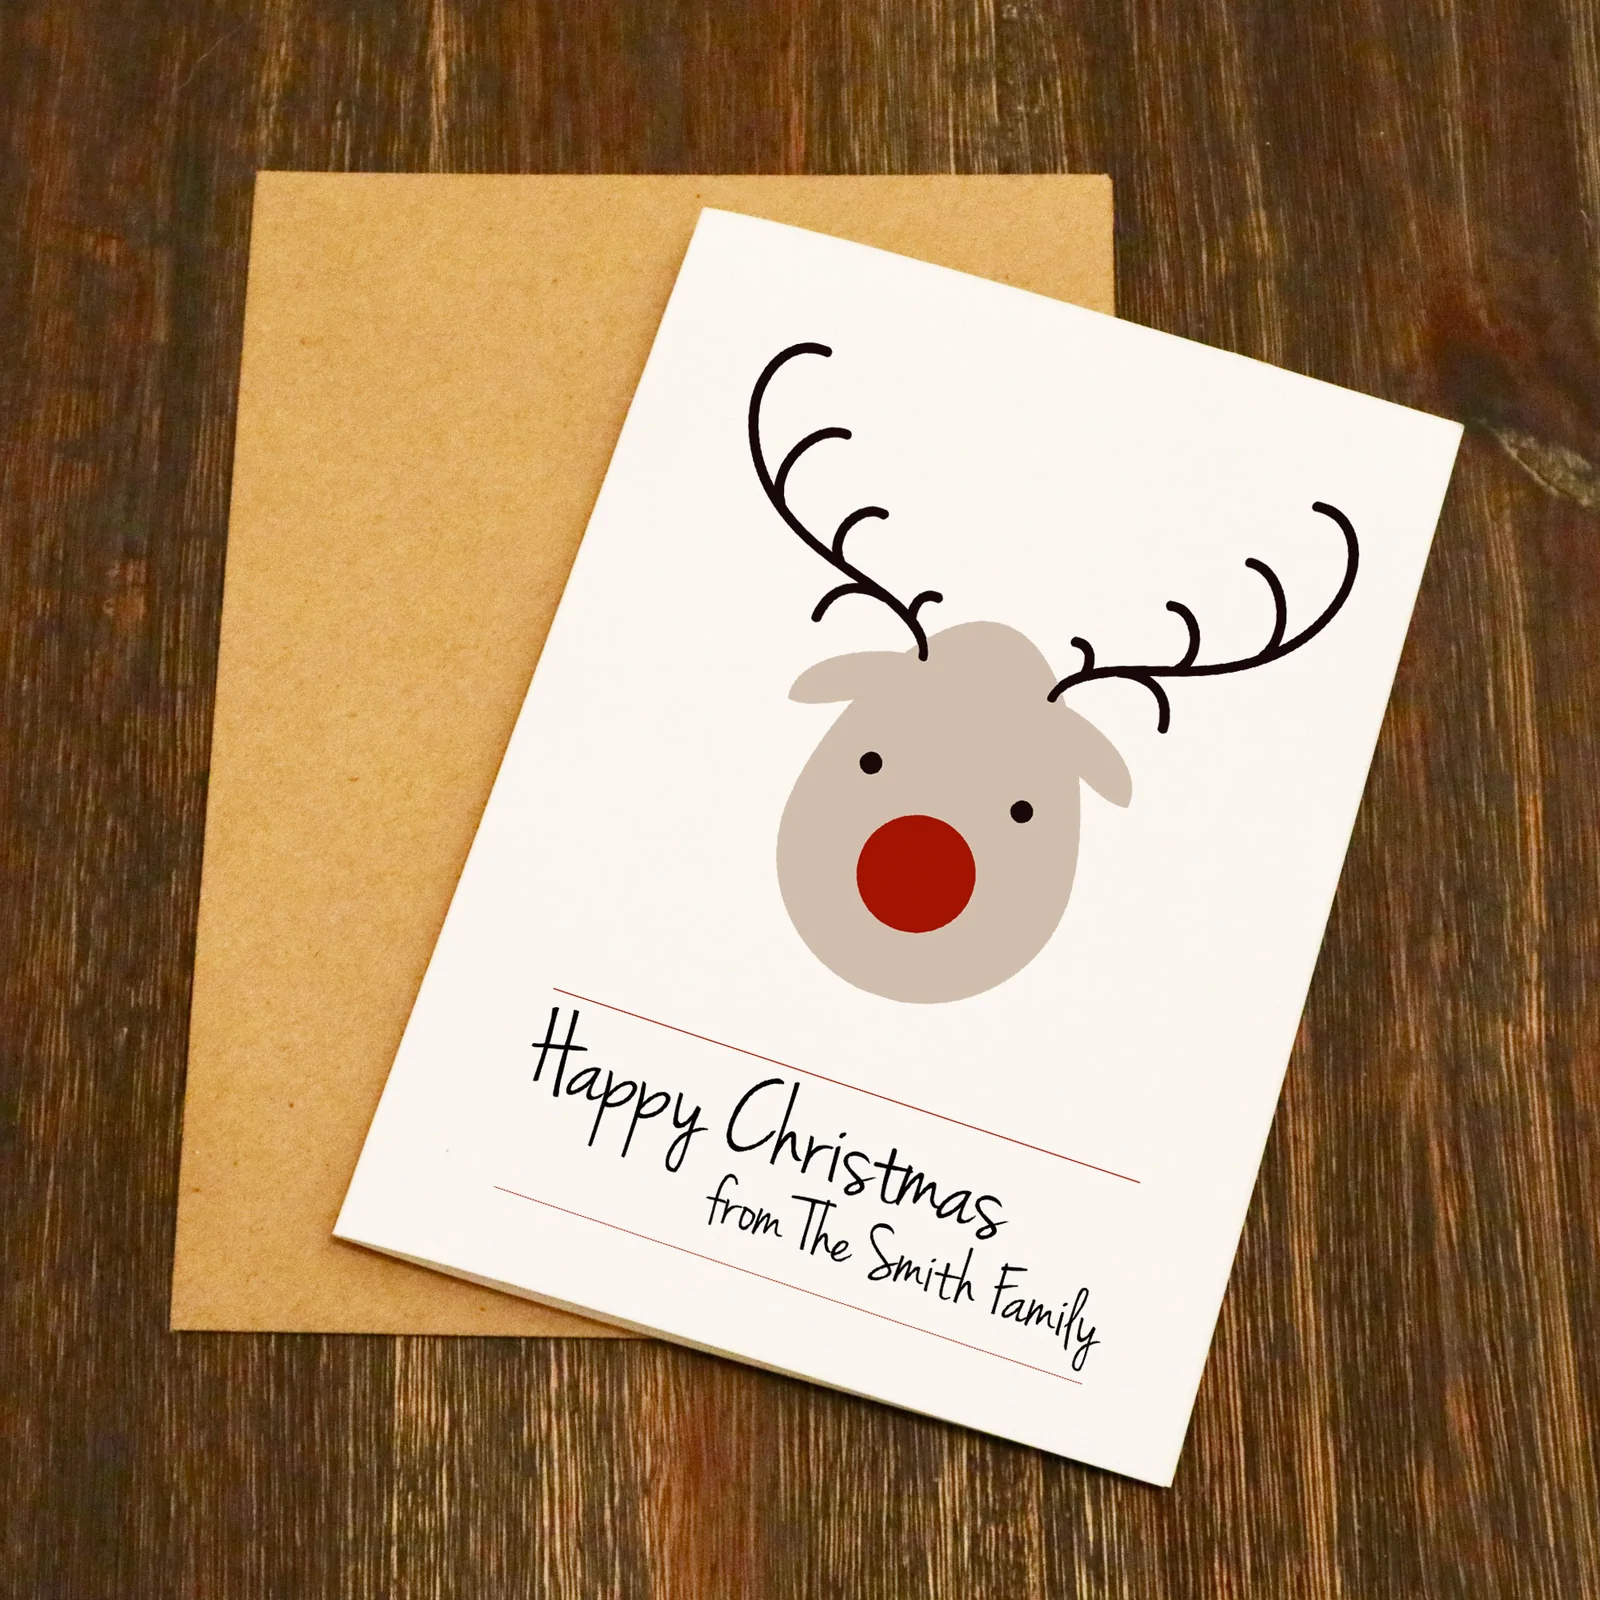 A simple DIY Christmas card - reindeer